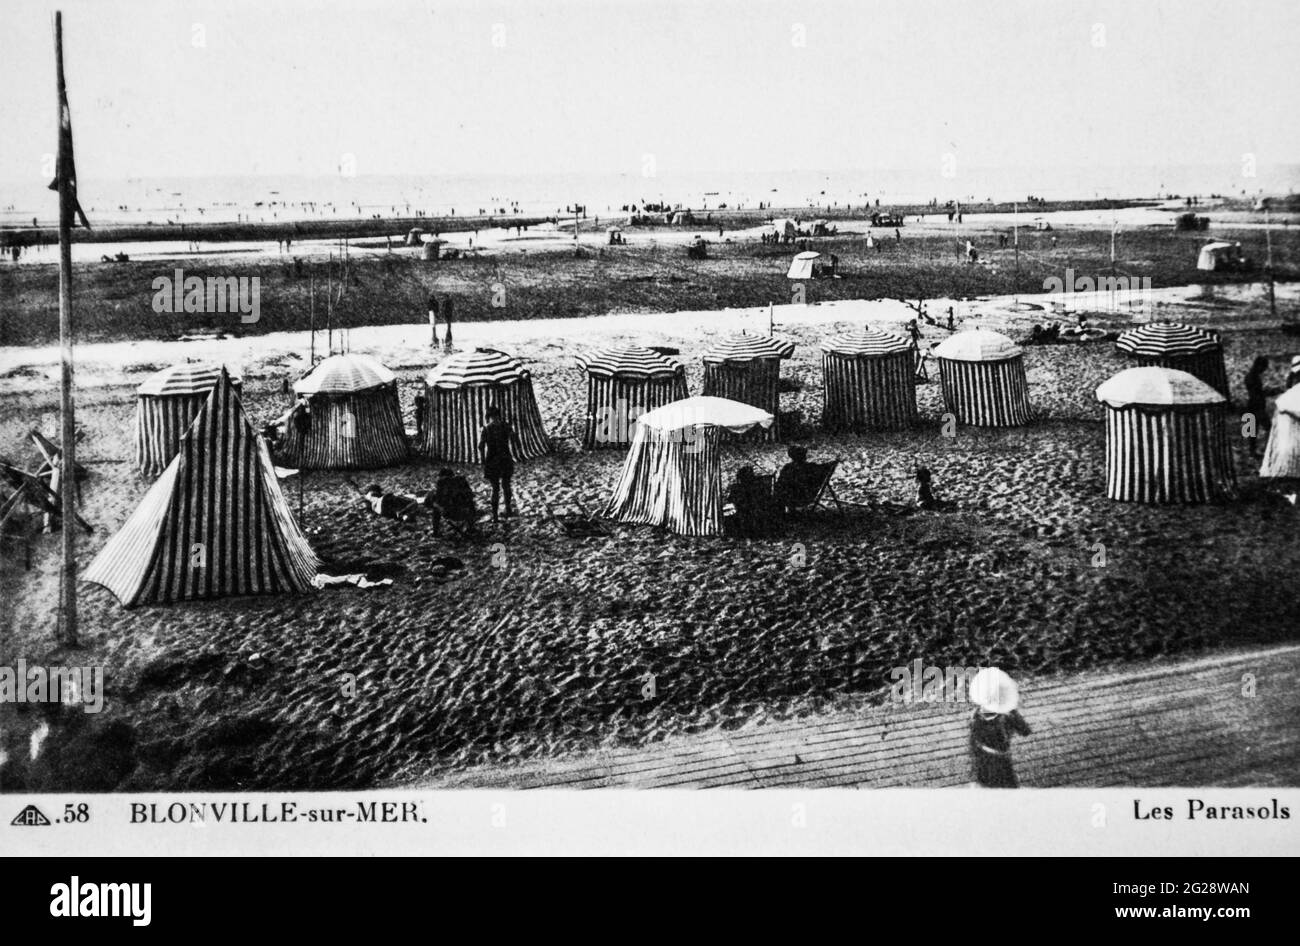 bionville sur mer, ombrelloni, carte postale 1900 Foto Stock